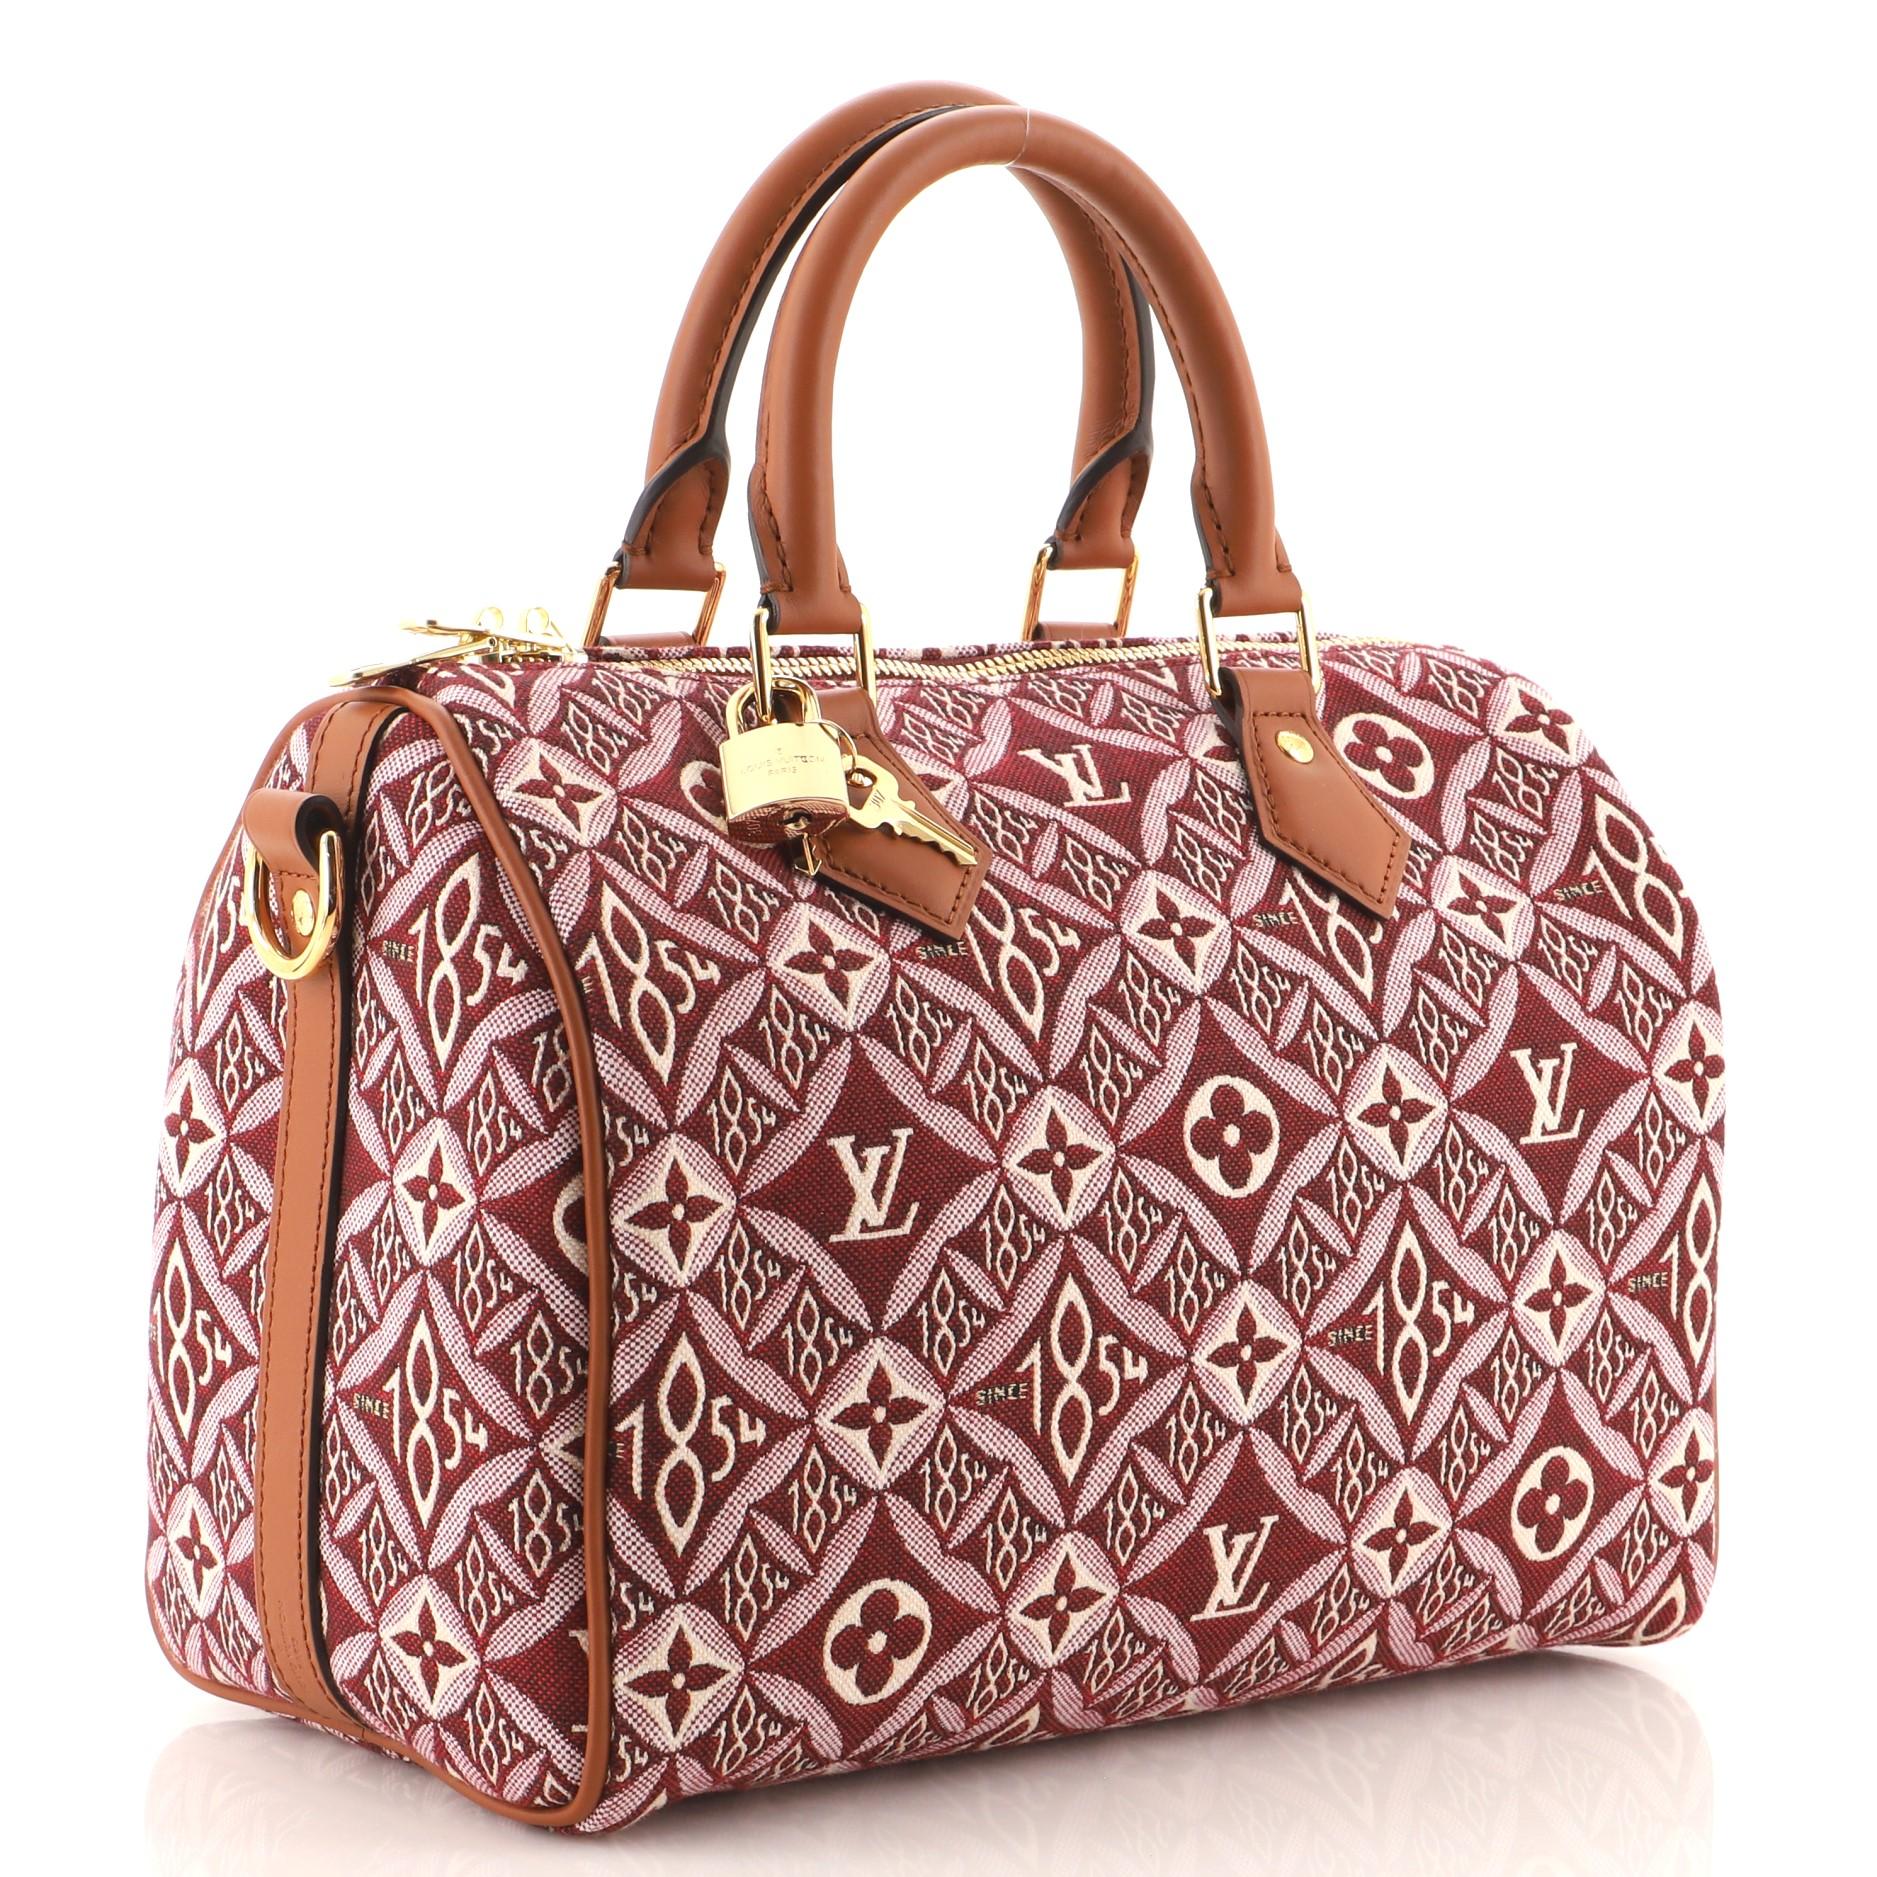 Brown Louis Vuitton Speedy Bandouliere Bag Limited Edition Since 1854 Monogram 